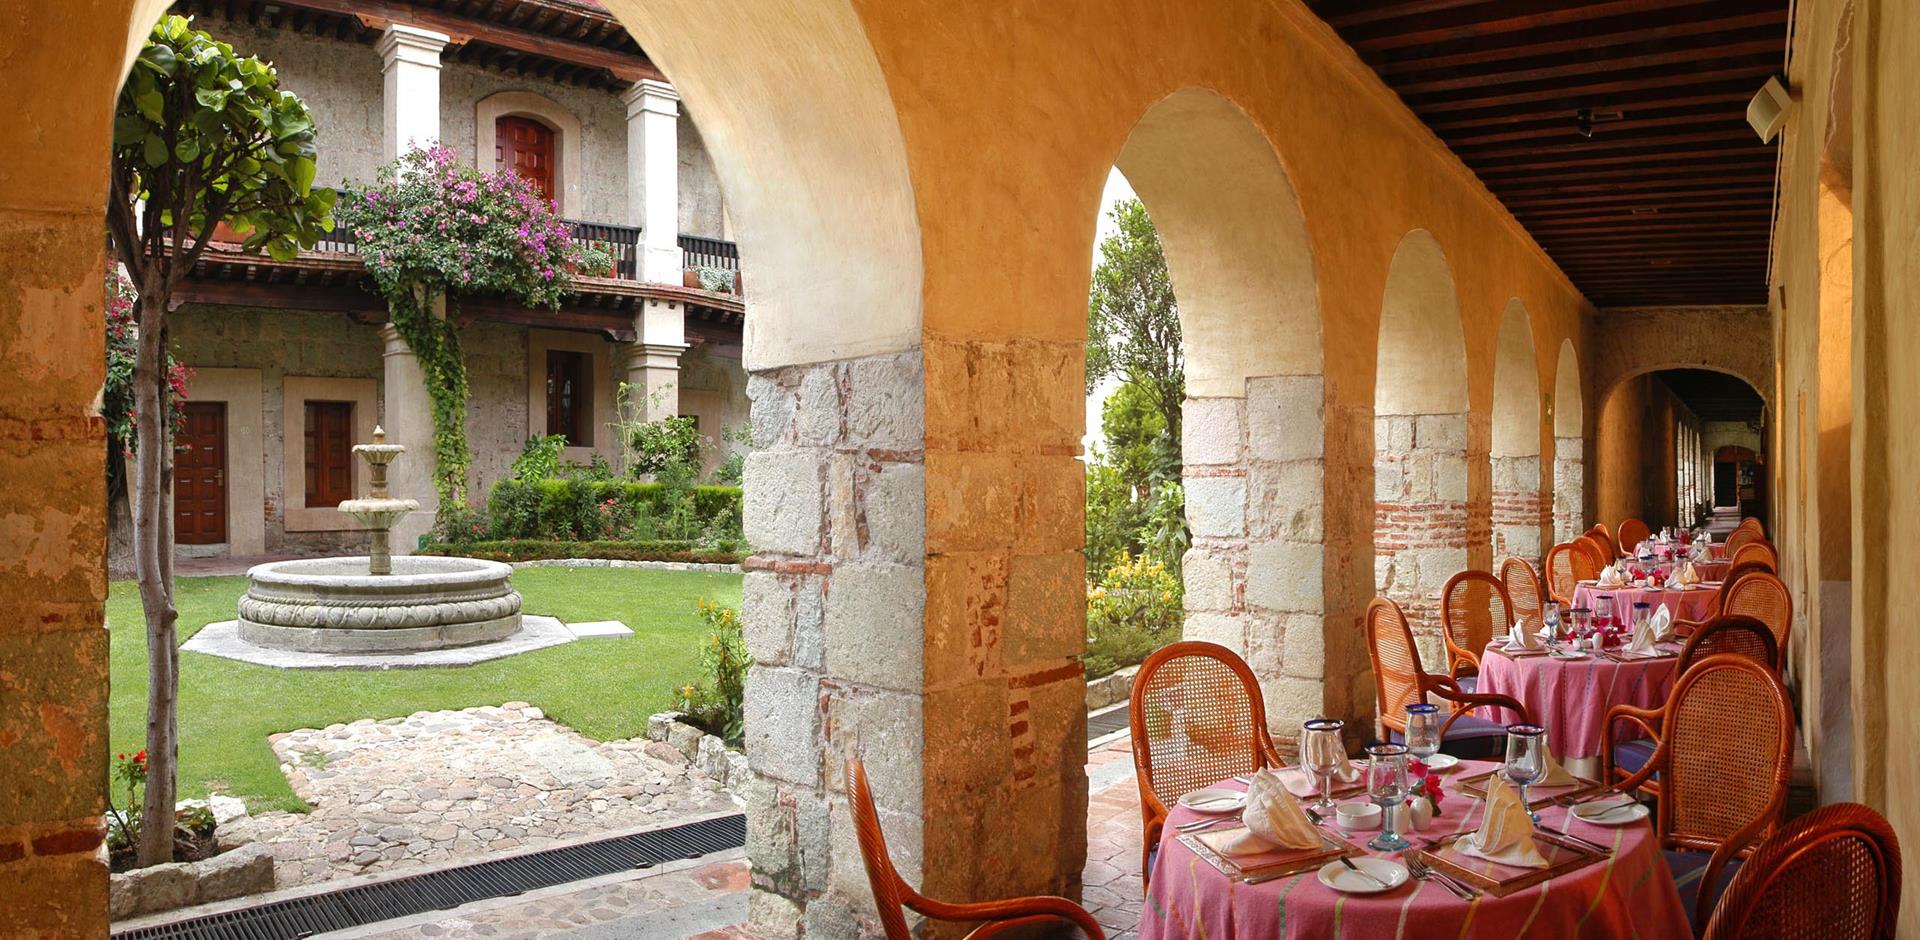 Quinta Real Oaxaca 